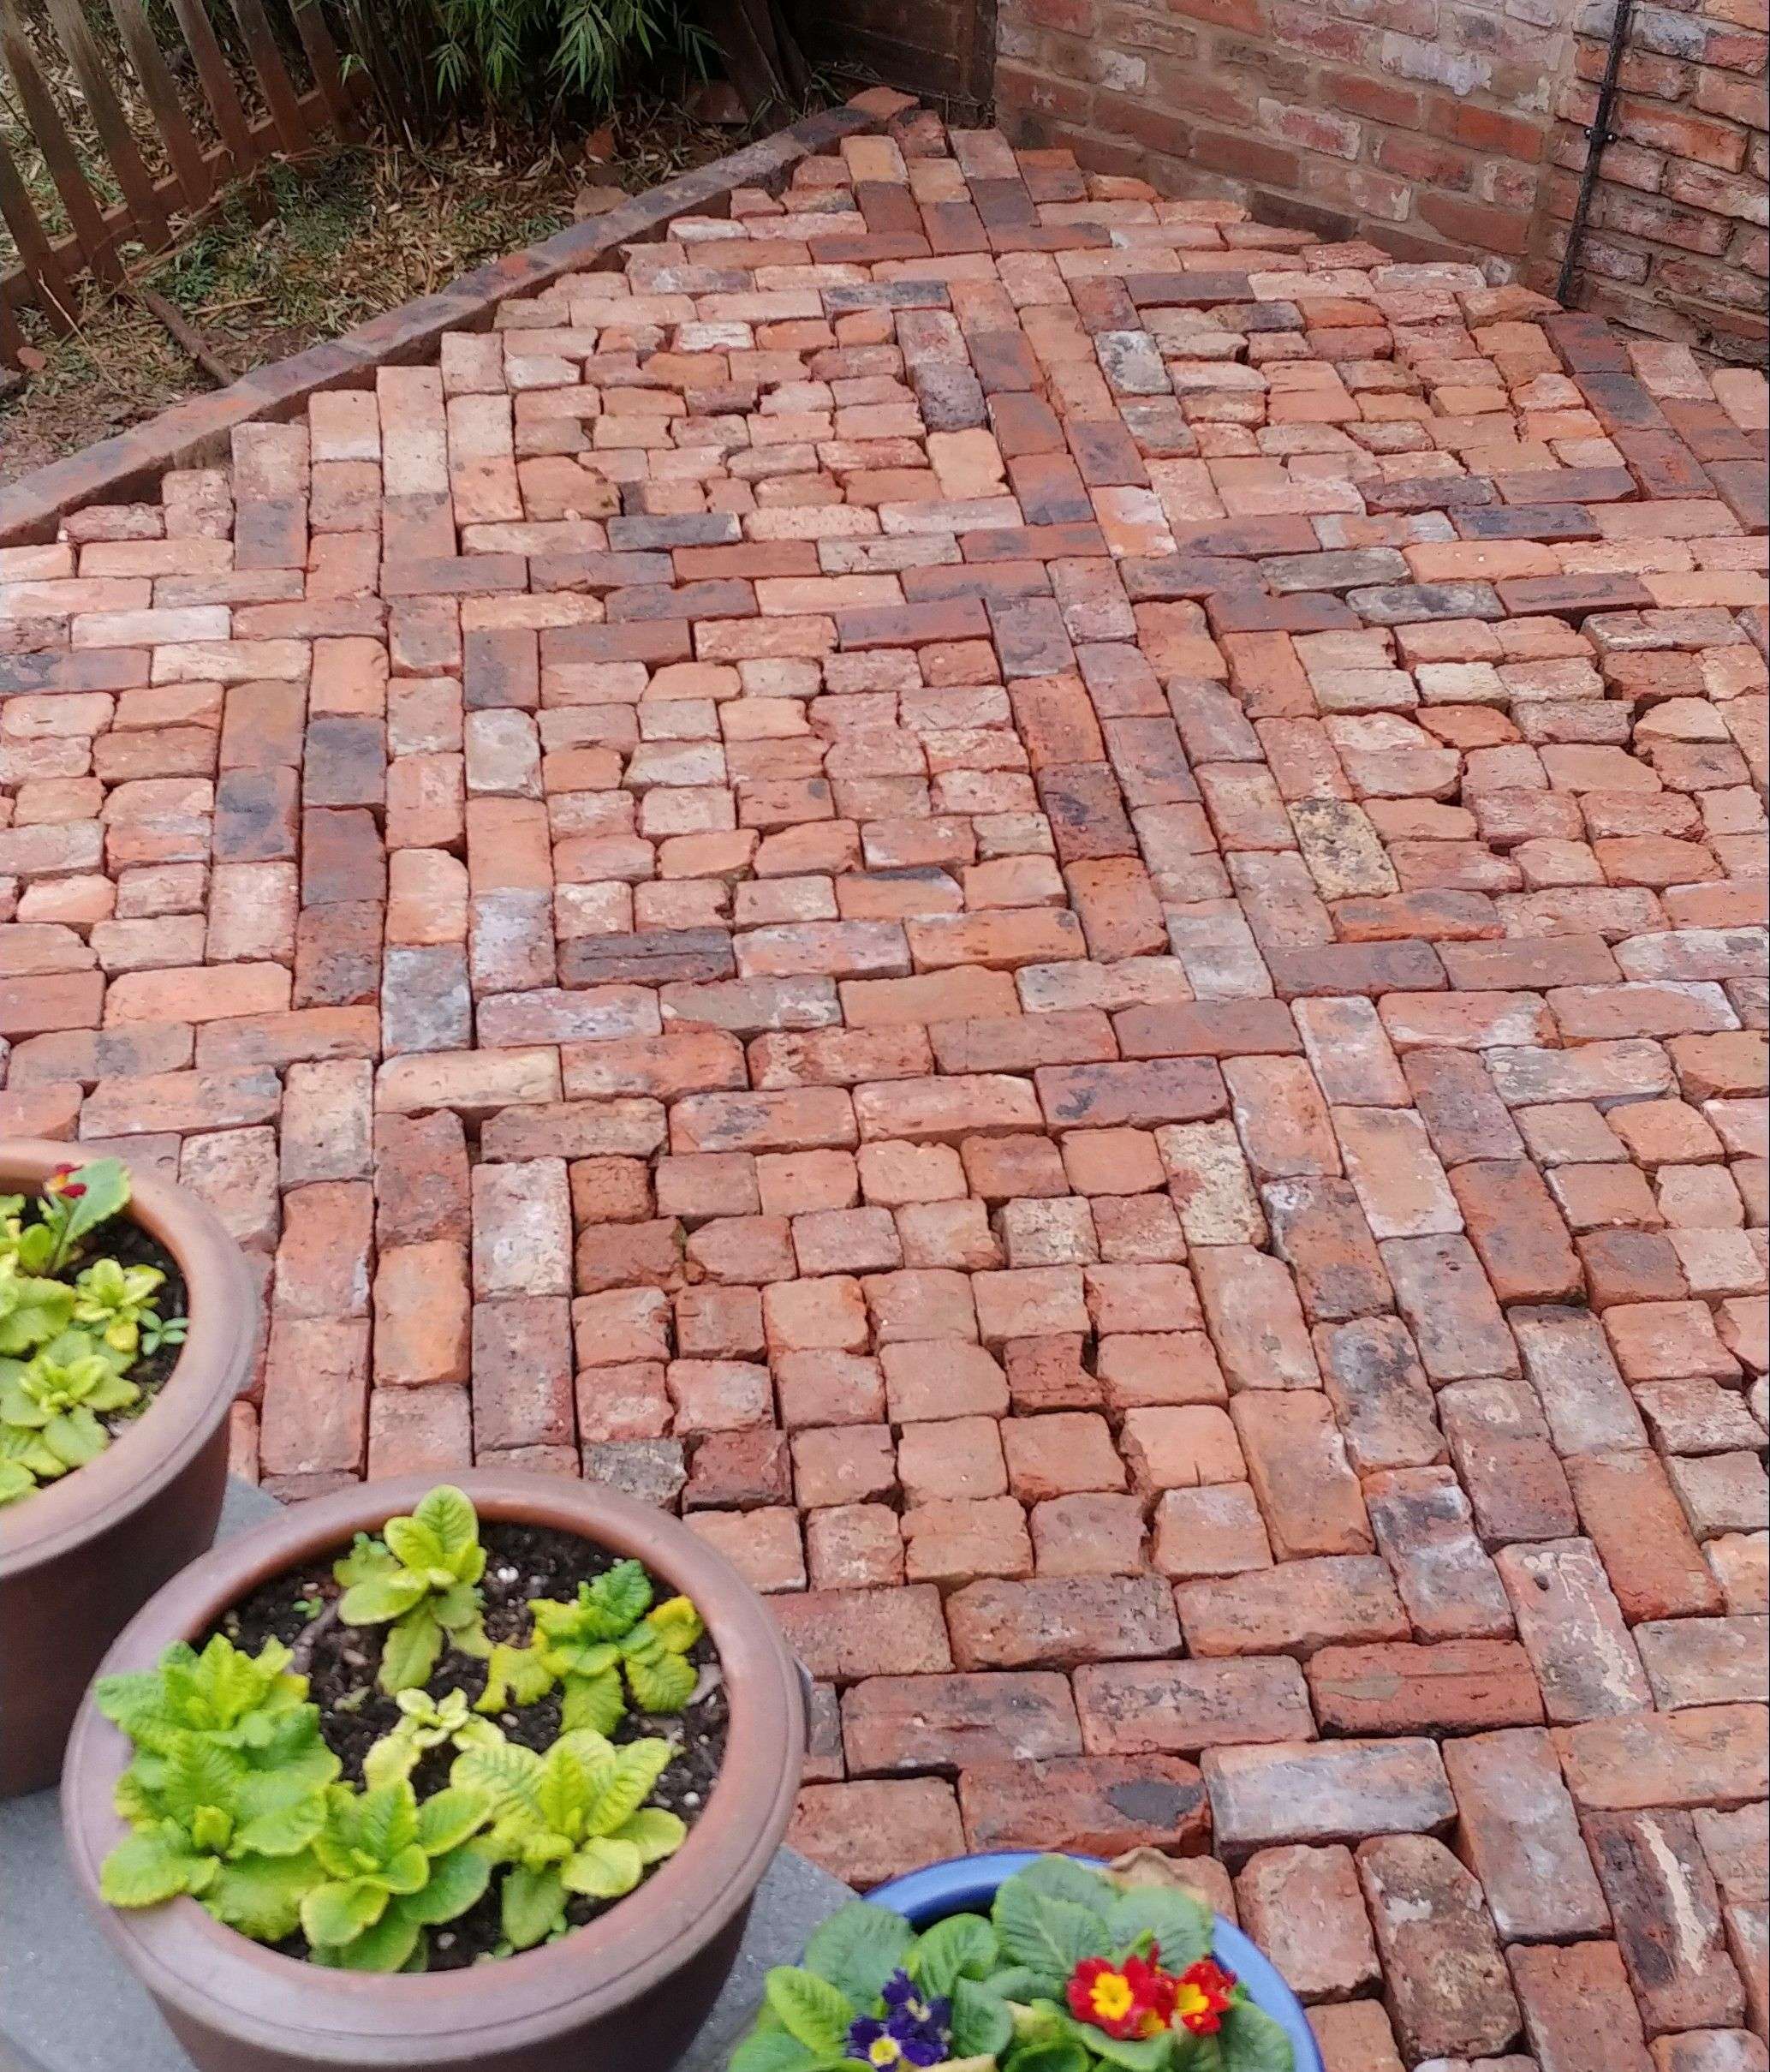 How to Lay a Patio from Reclaimed Bricks â Alice de Araujo